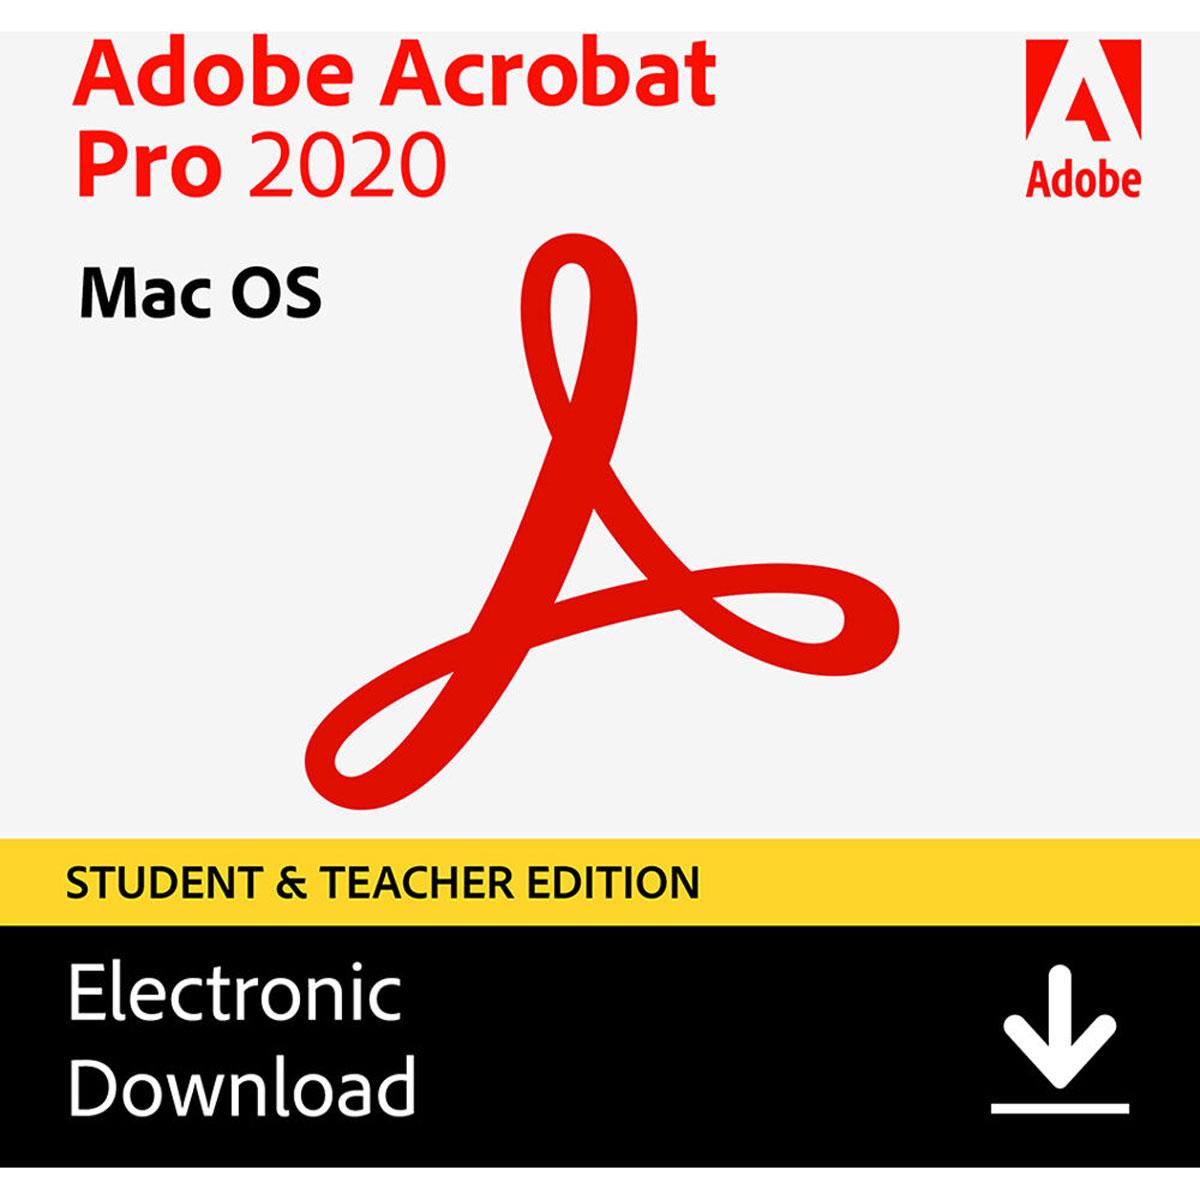 Image of Adobe Acrobat Pro 2020 Software for Mac